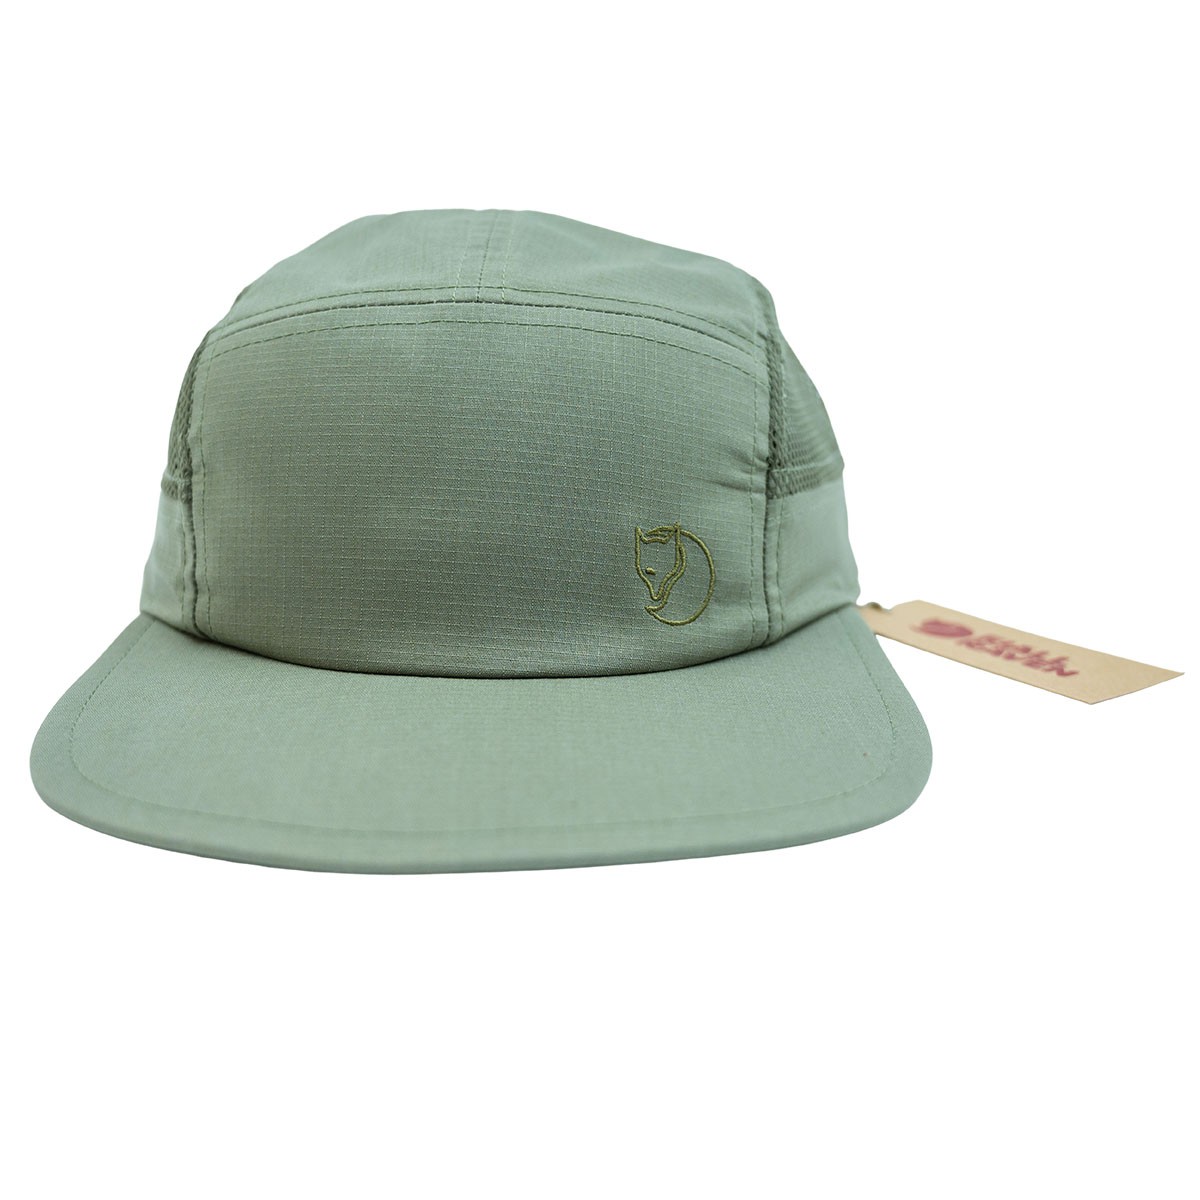 Fjallraven Abisko Mesh Cap 棒球帽 透氣網布 淺橄欖綠色